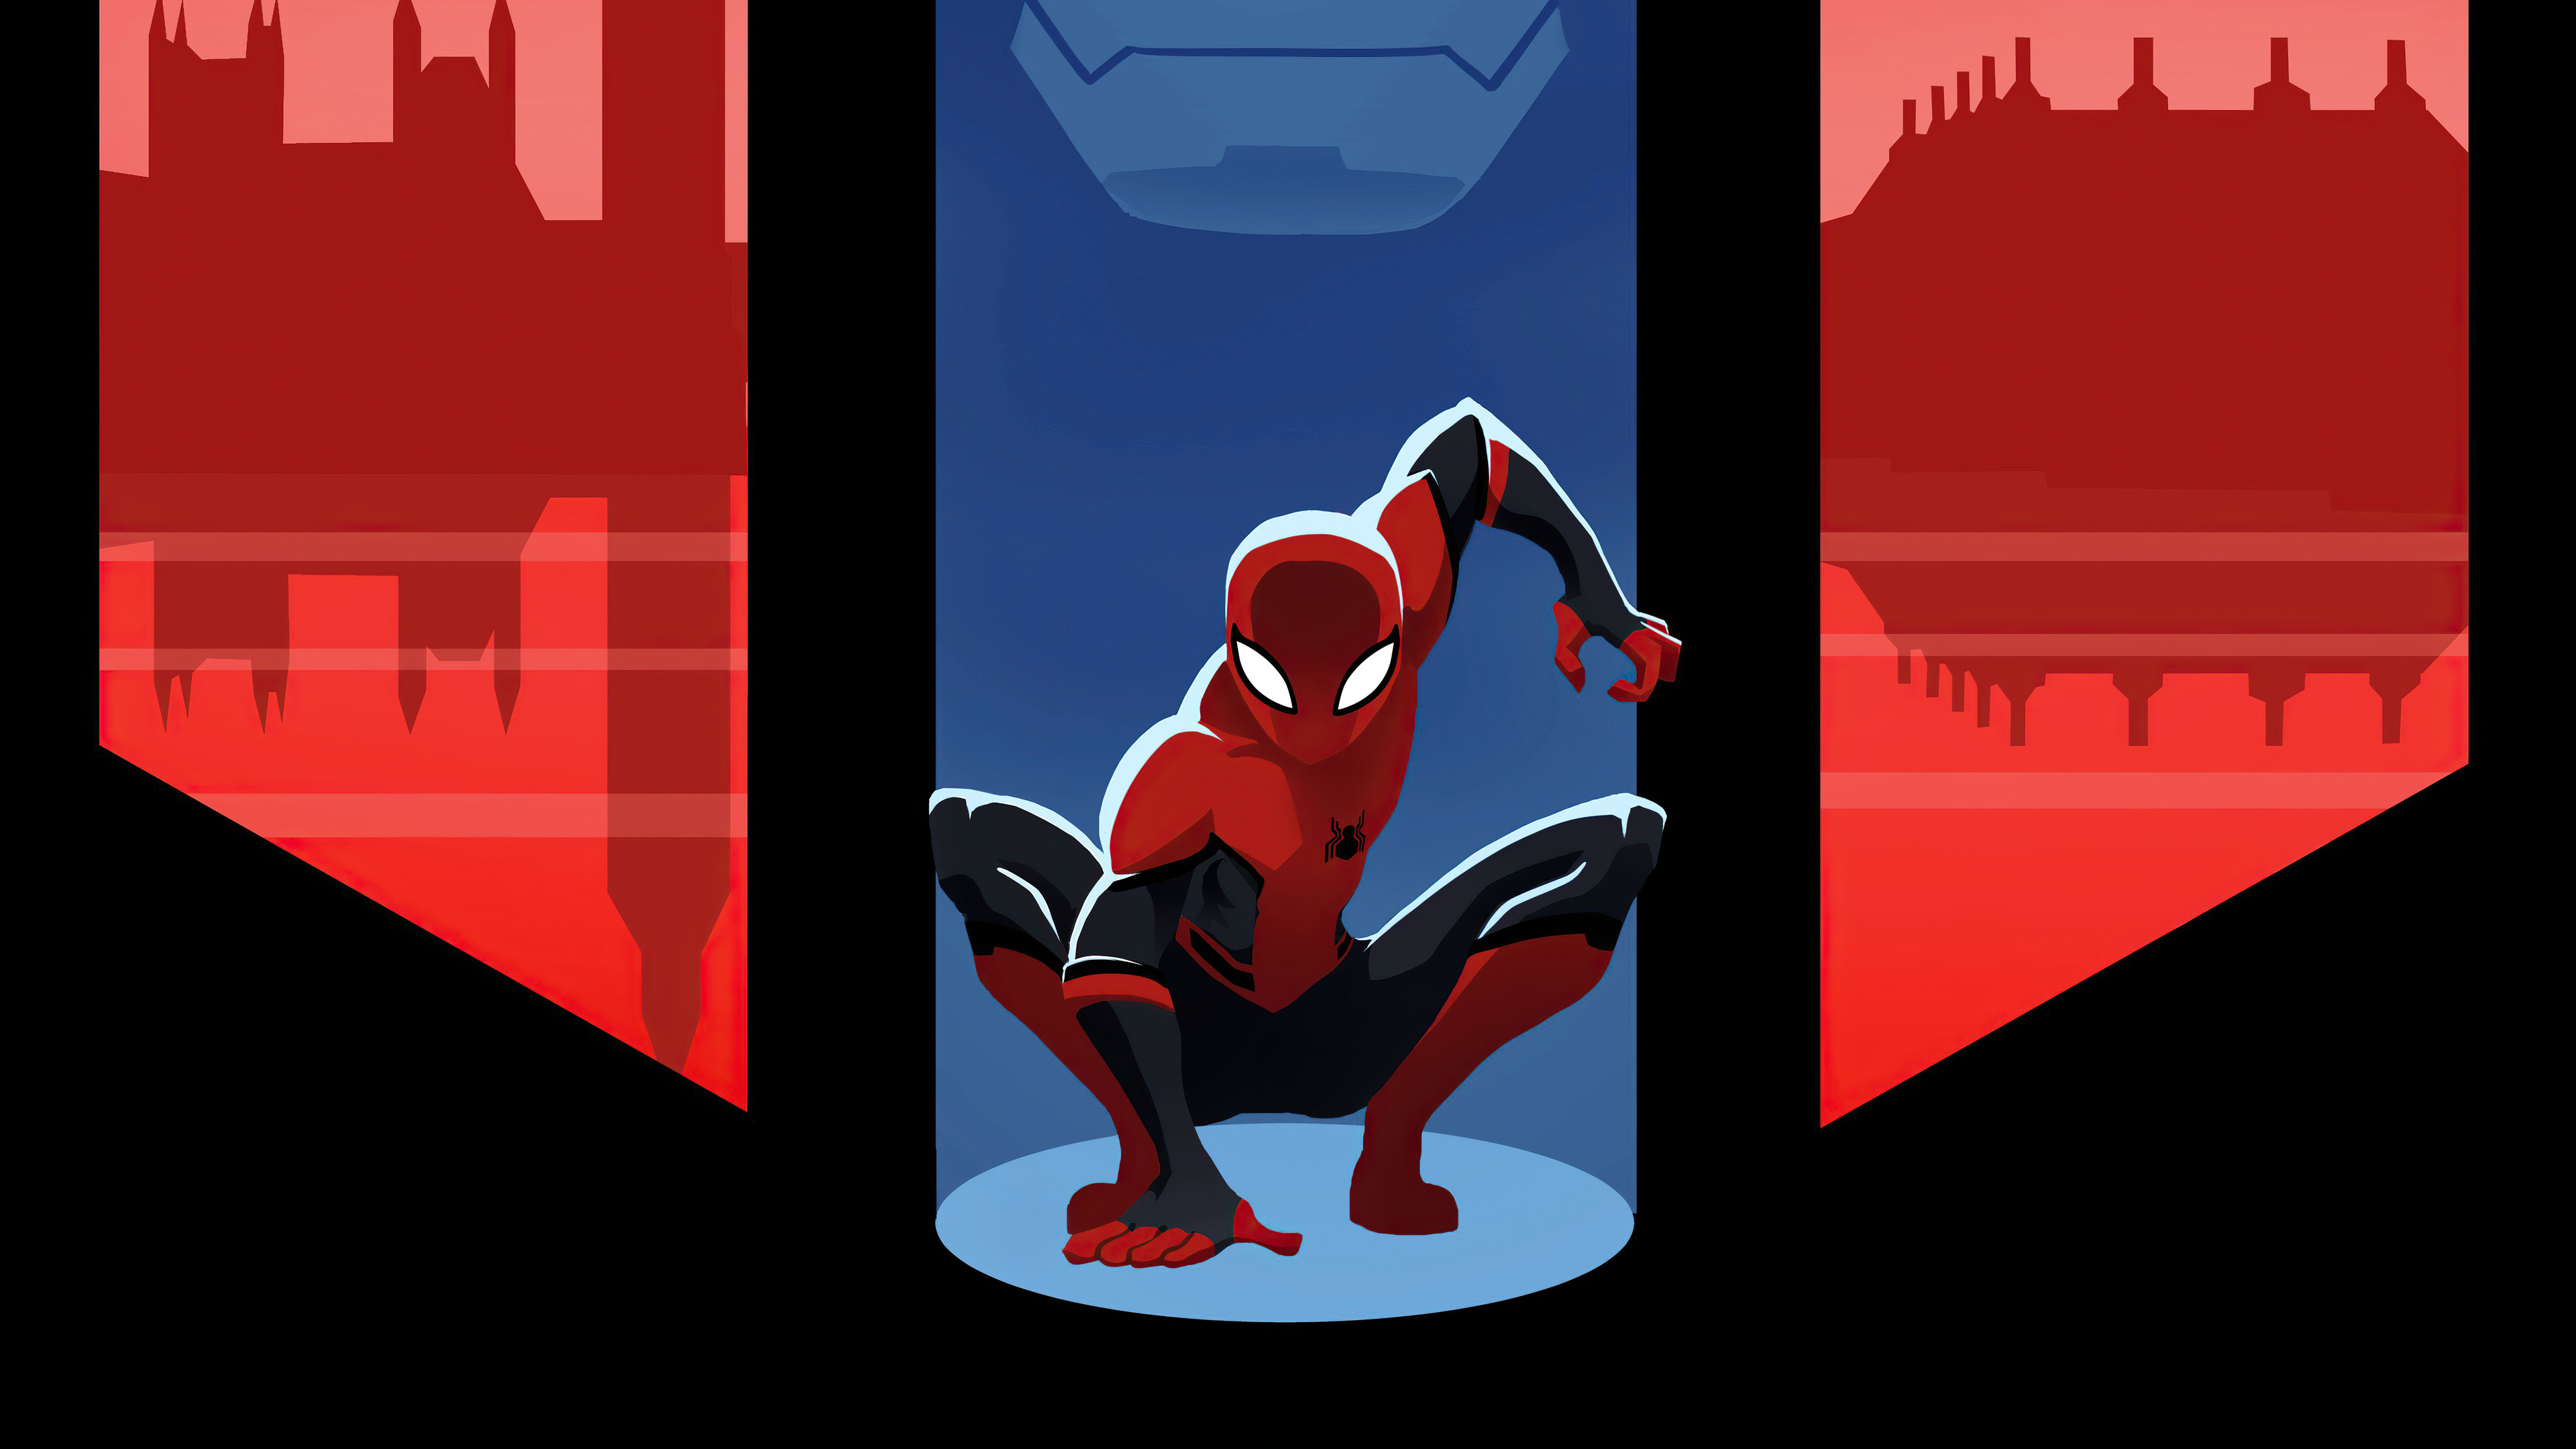 Spider-Man 4k Marvel Minimal Art Wallpaper, HD Minimalist 4K Wallpapers,  Images, Photos and Background - Wallpapers Den